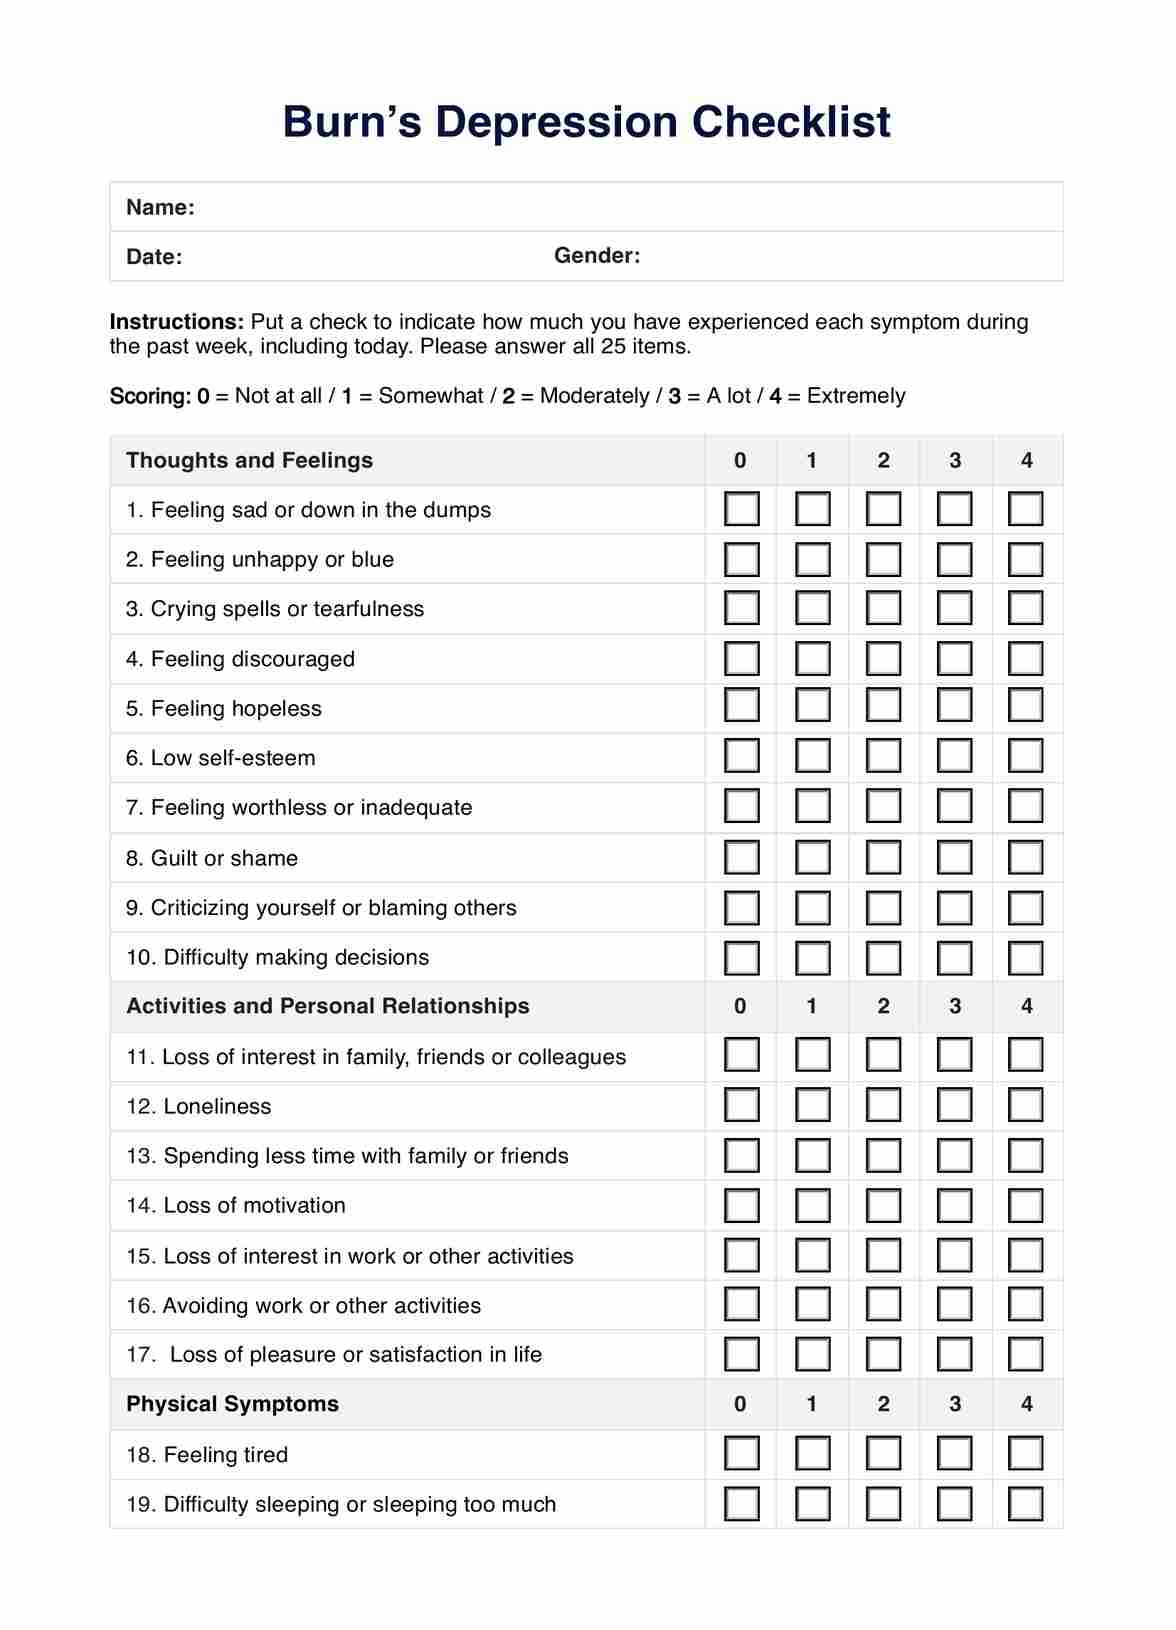 Burns Depression Checklist PDF Example